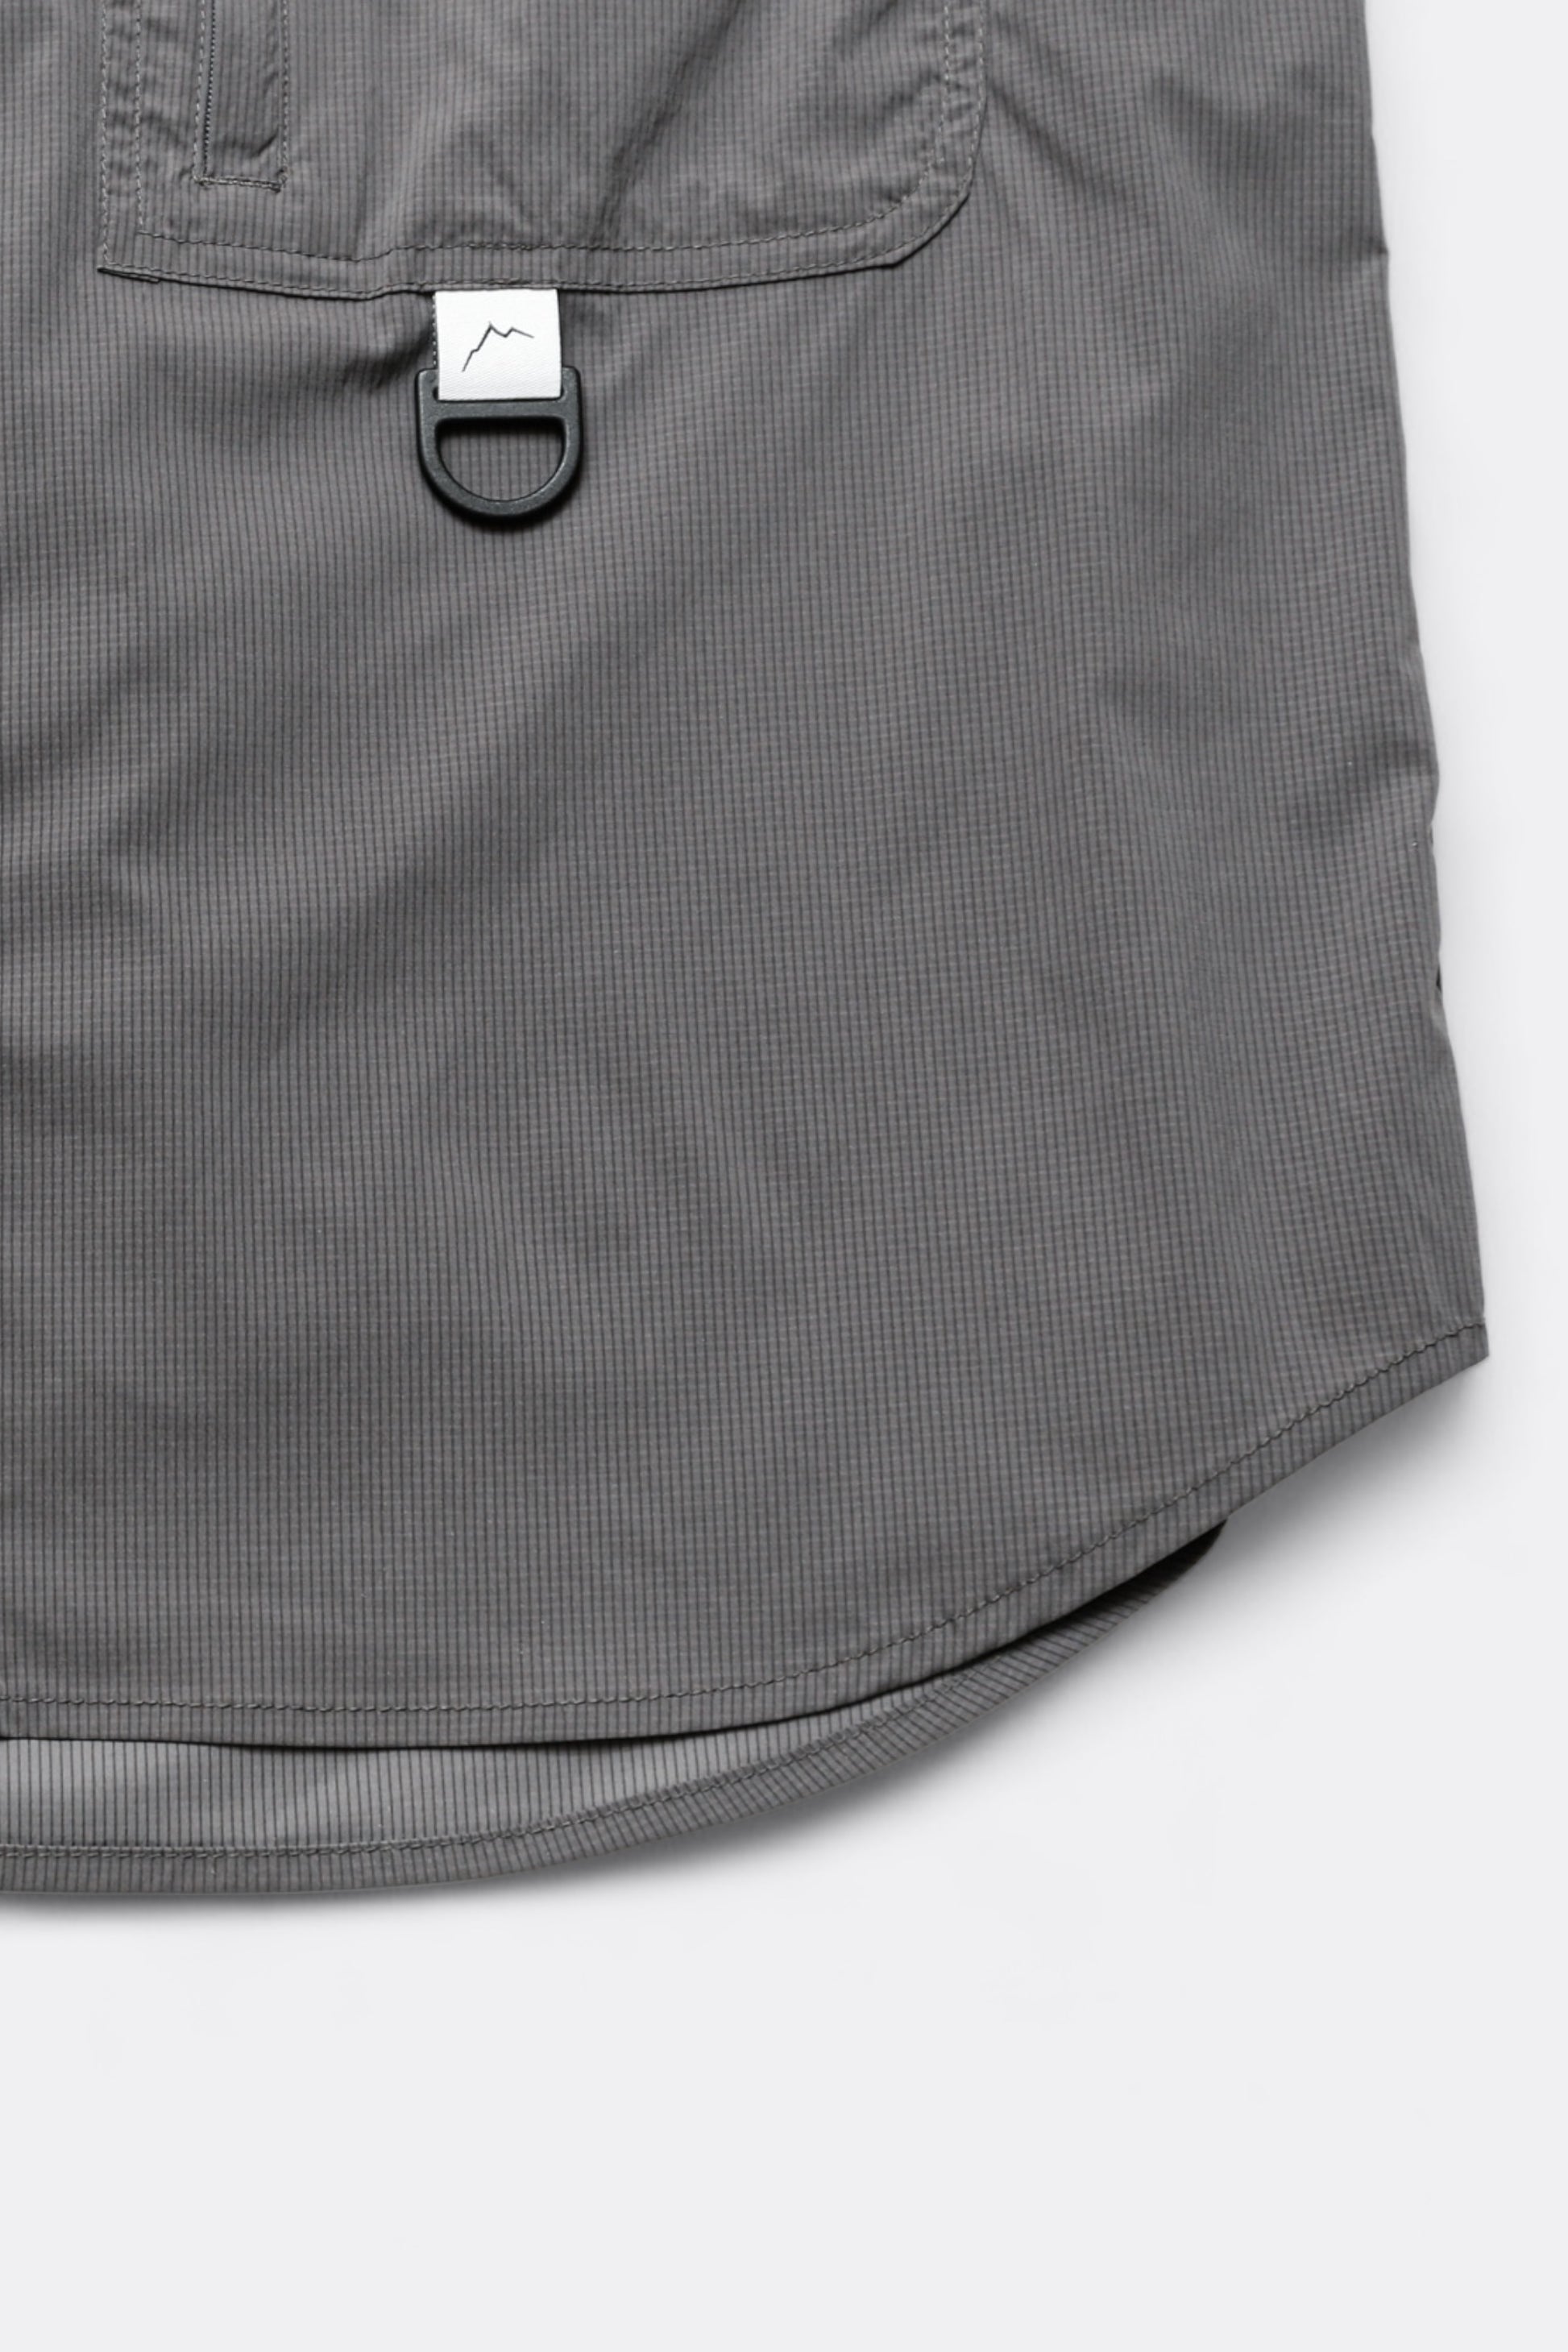 Stretch Nylon Hiker Shirts (Grey)